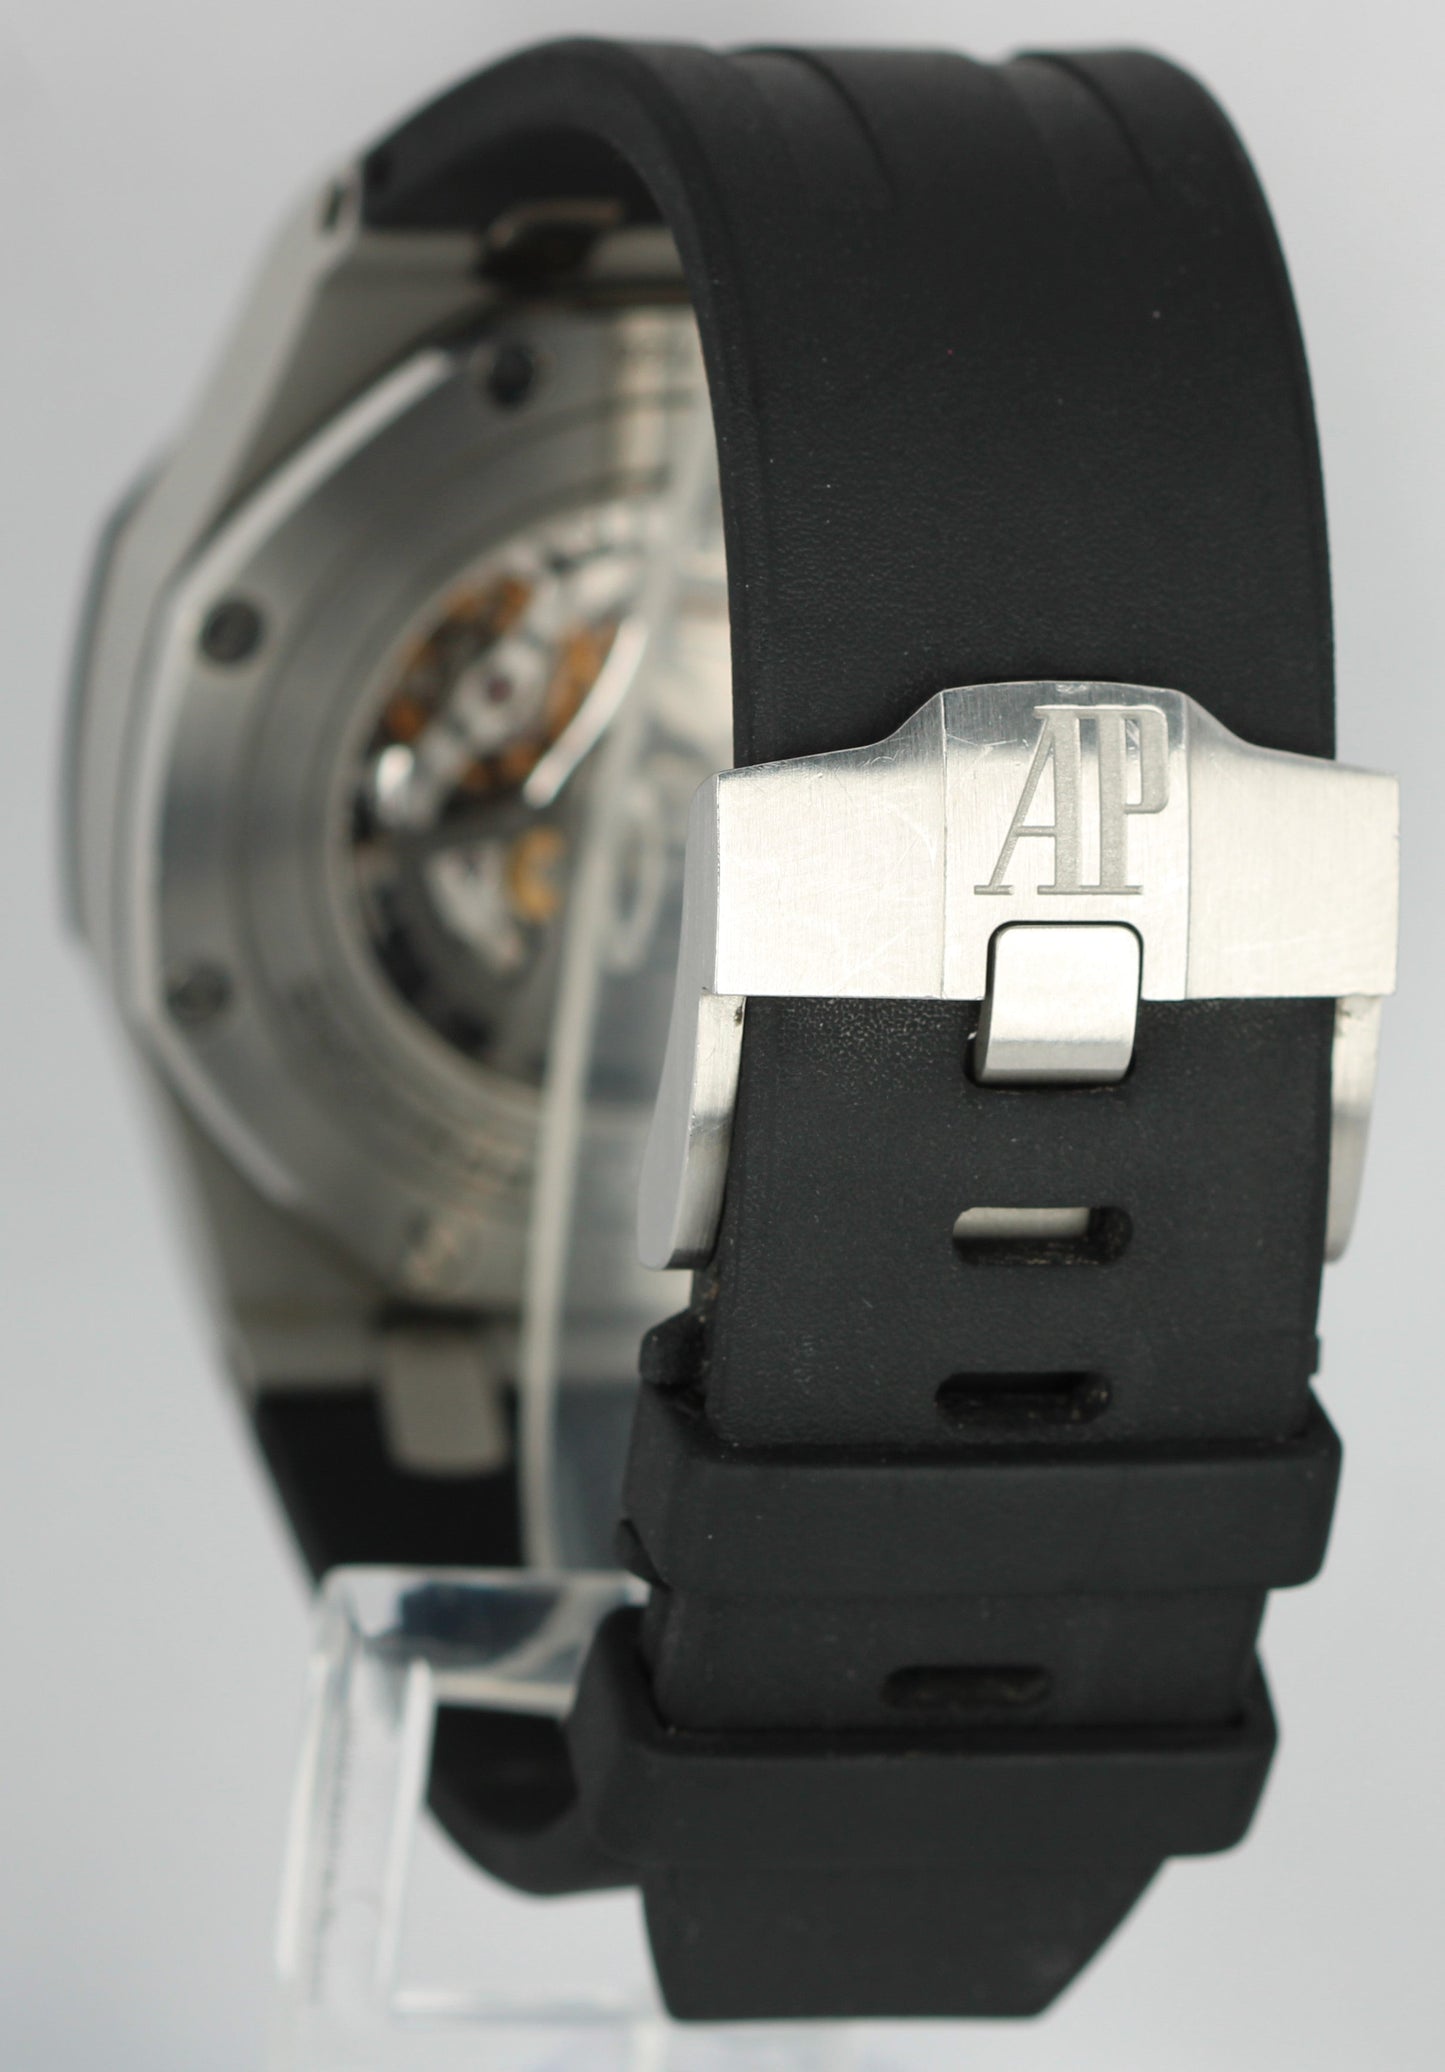 Audemars Piguet Royal Oak Offshore Silver Tapisserie Dial 44mm 26400S0 Watch